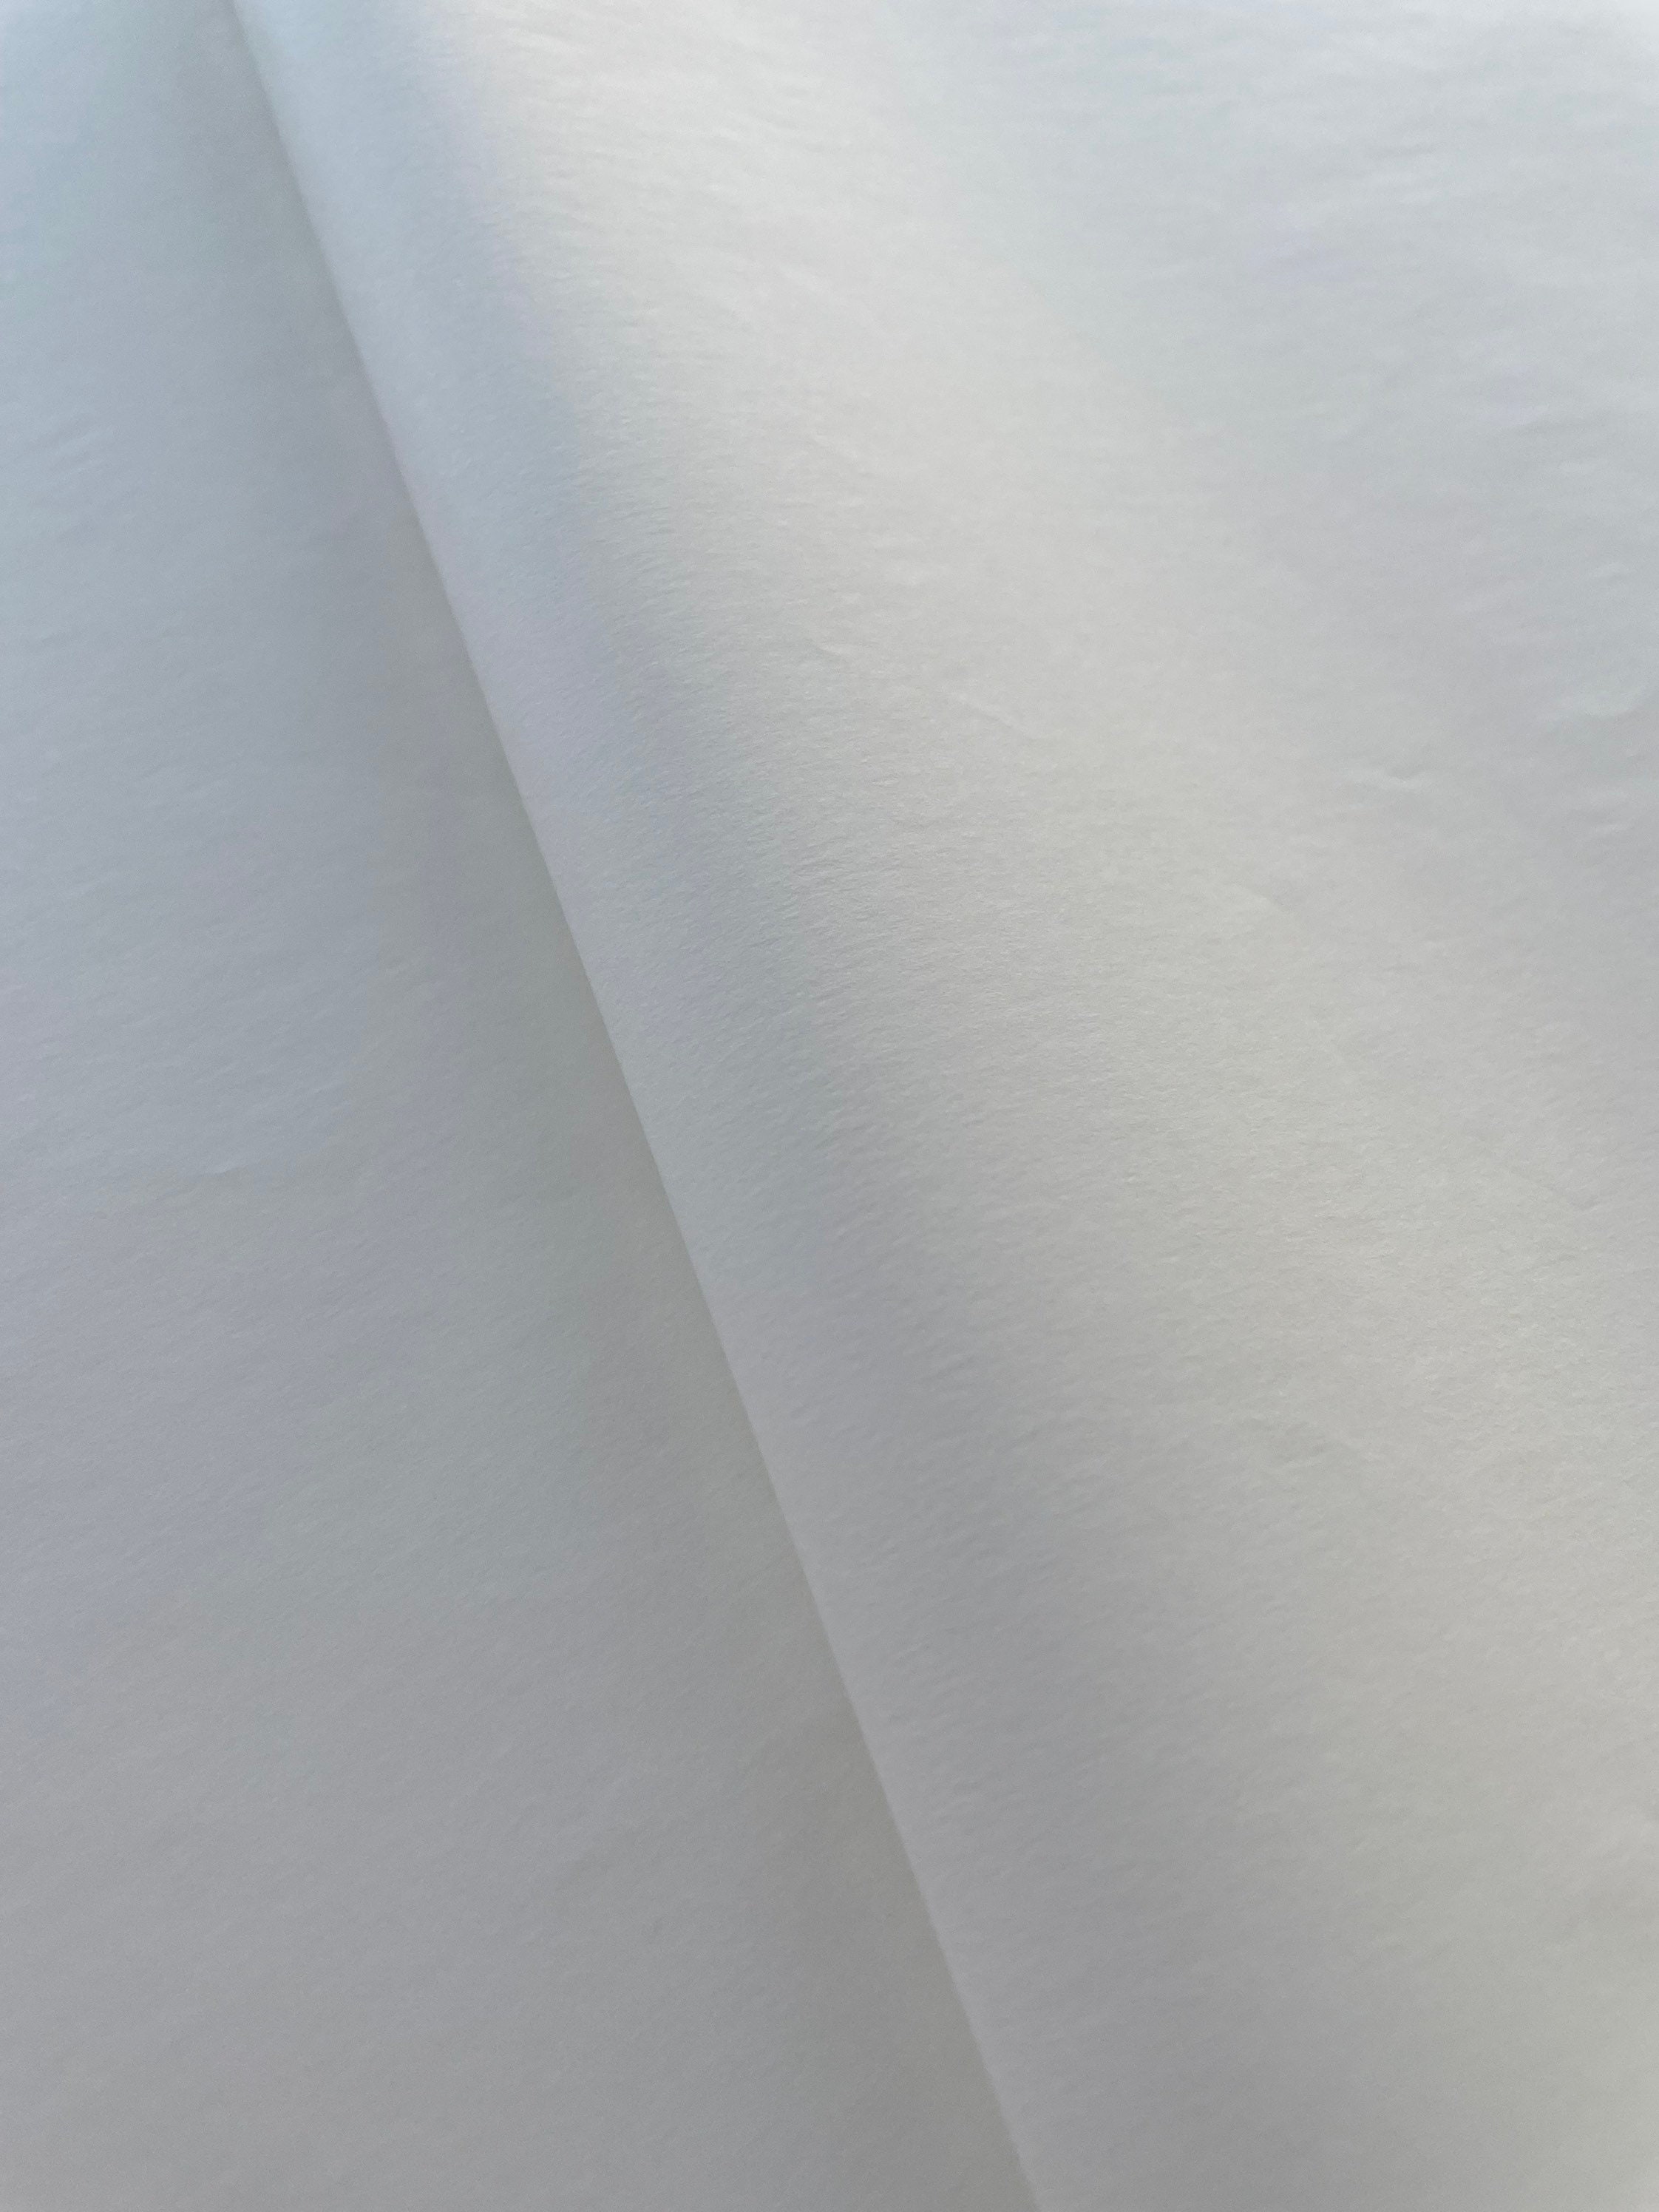 Full Sheets Wet Strength Tissue Transluscent White Paper 17gsm